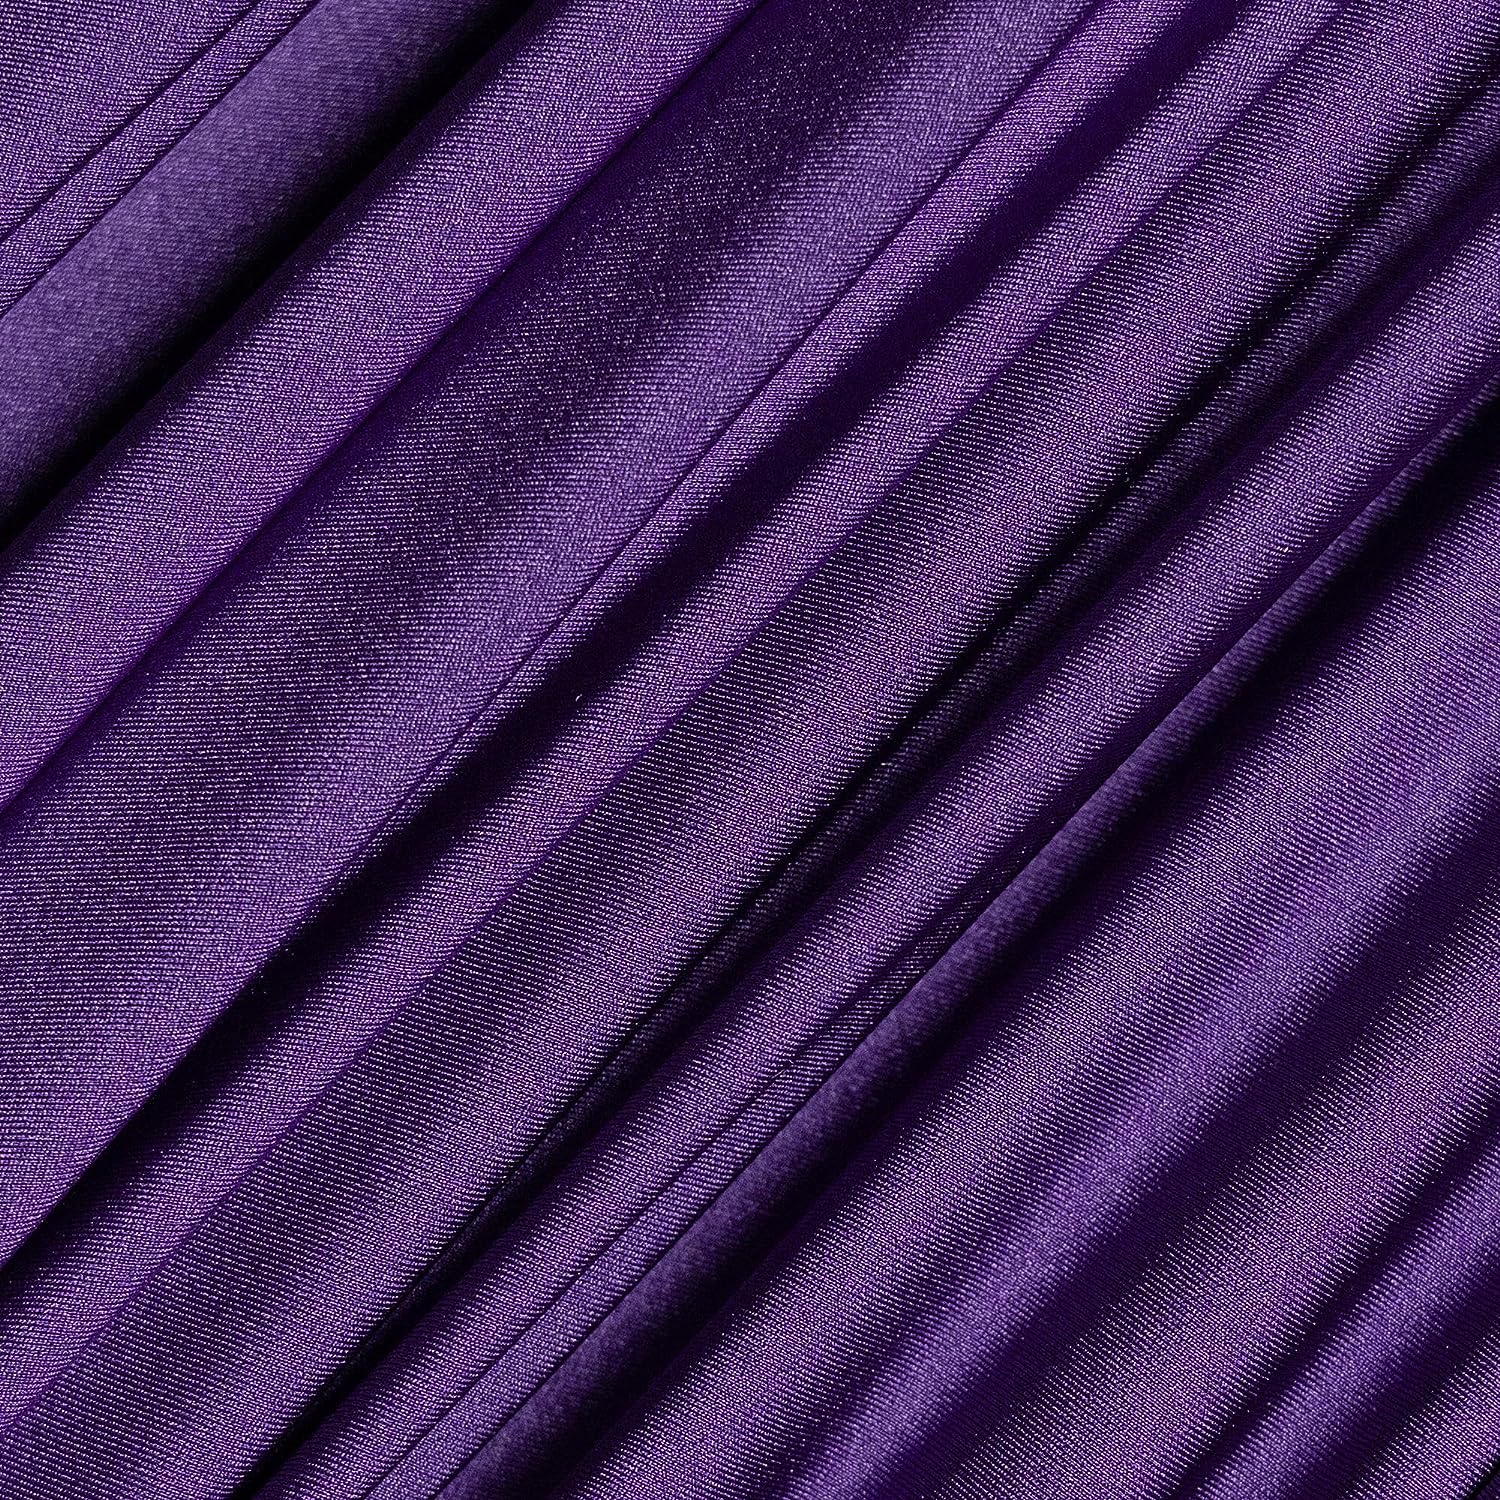 Purple Luxury Nylon Spandex Fabric By The YardICE FABRICSICE FABRICSBy The Yard (58" Width)Purple Luxury Nylon Spandex Fabric By The Yard ICE FABRICS